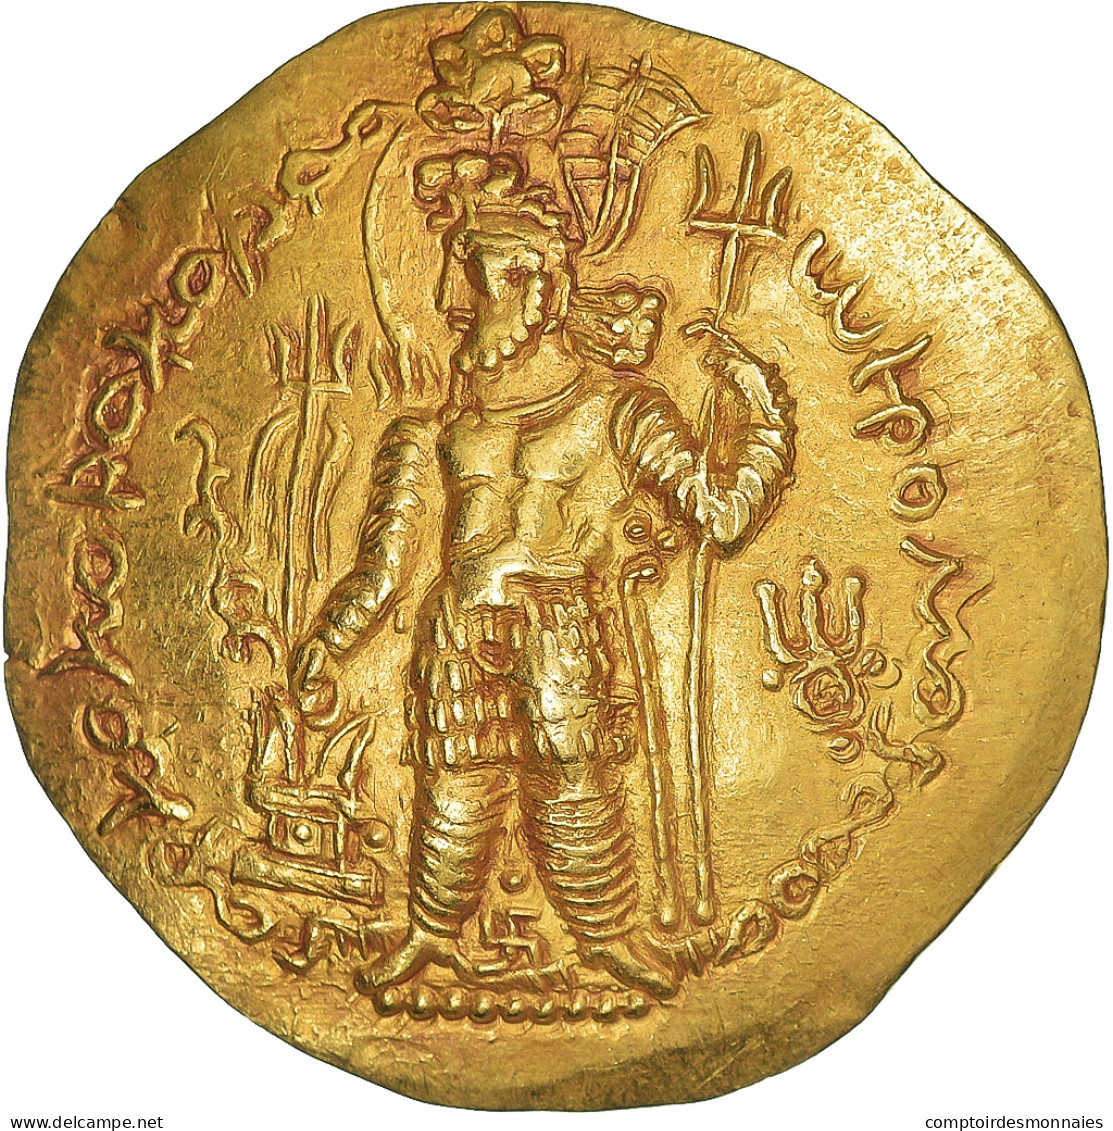 Monnaie, Kushano-Sasanians, Ohrmazd I, Dinar, 270-300, Balkh (?), SPL, Or - Indias